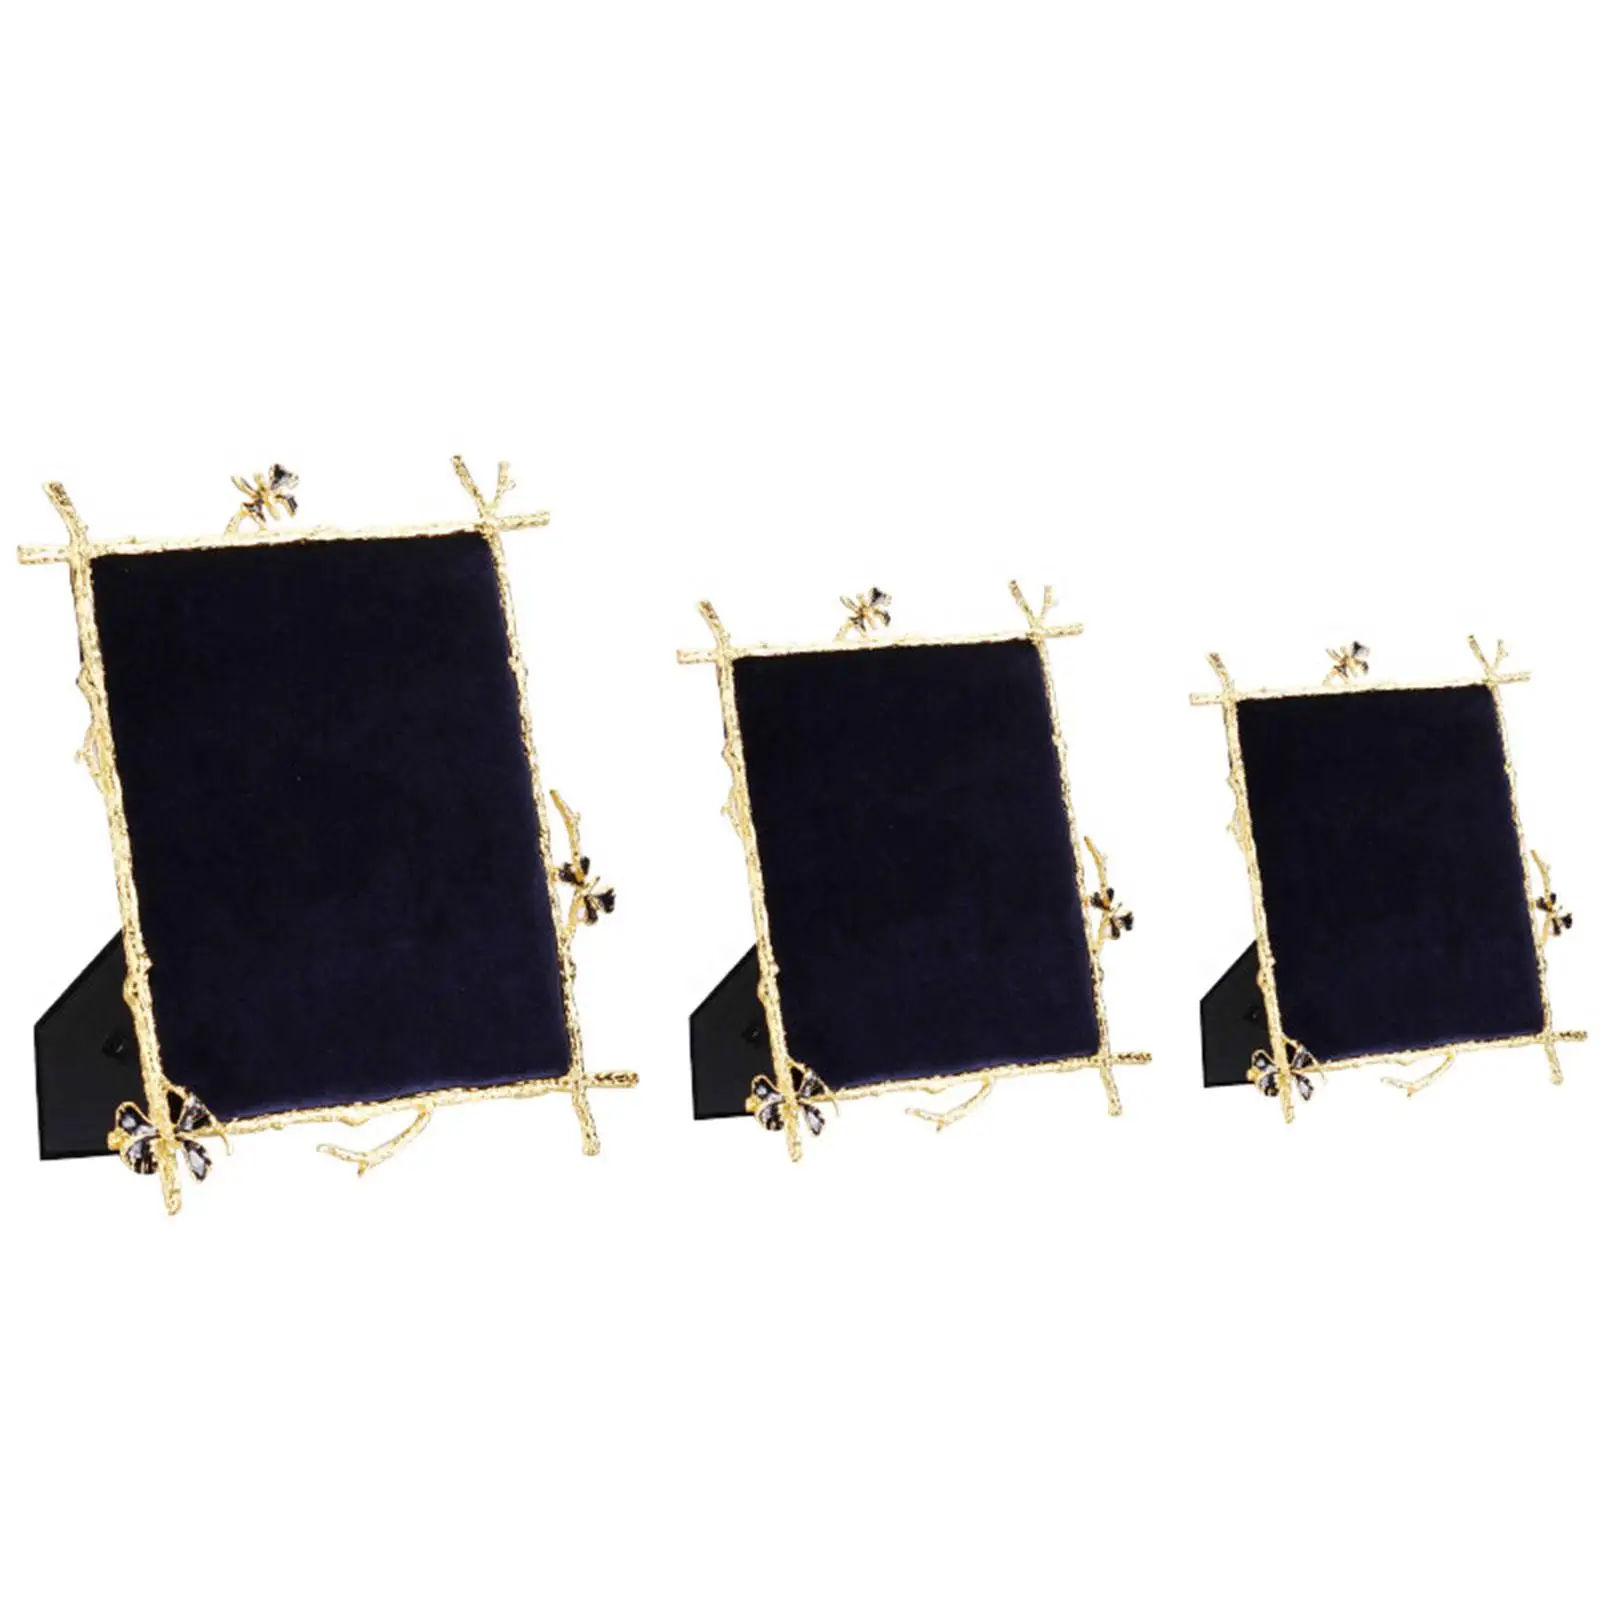 Jewelry Display Earrings Holder Hanging Display Earring Hanger Rack Bracelet Display Organizer Jewellery Organizer for Dresser